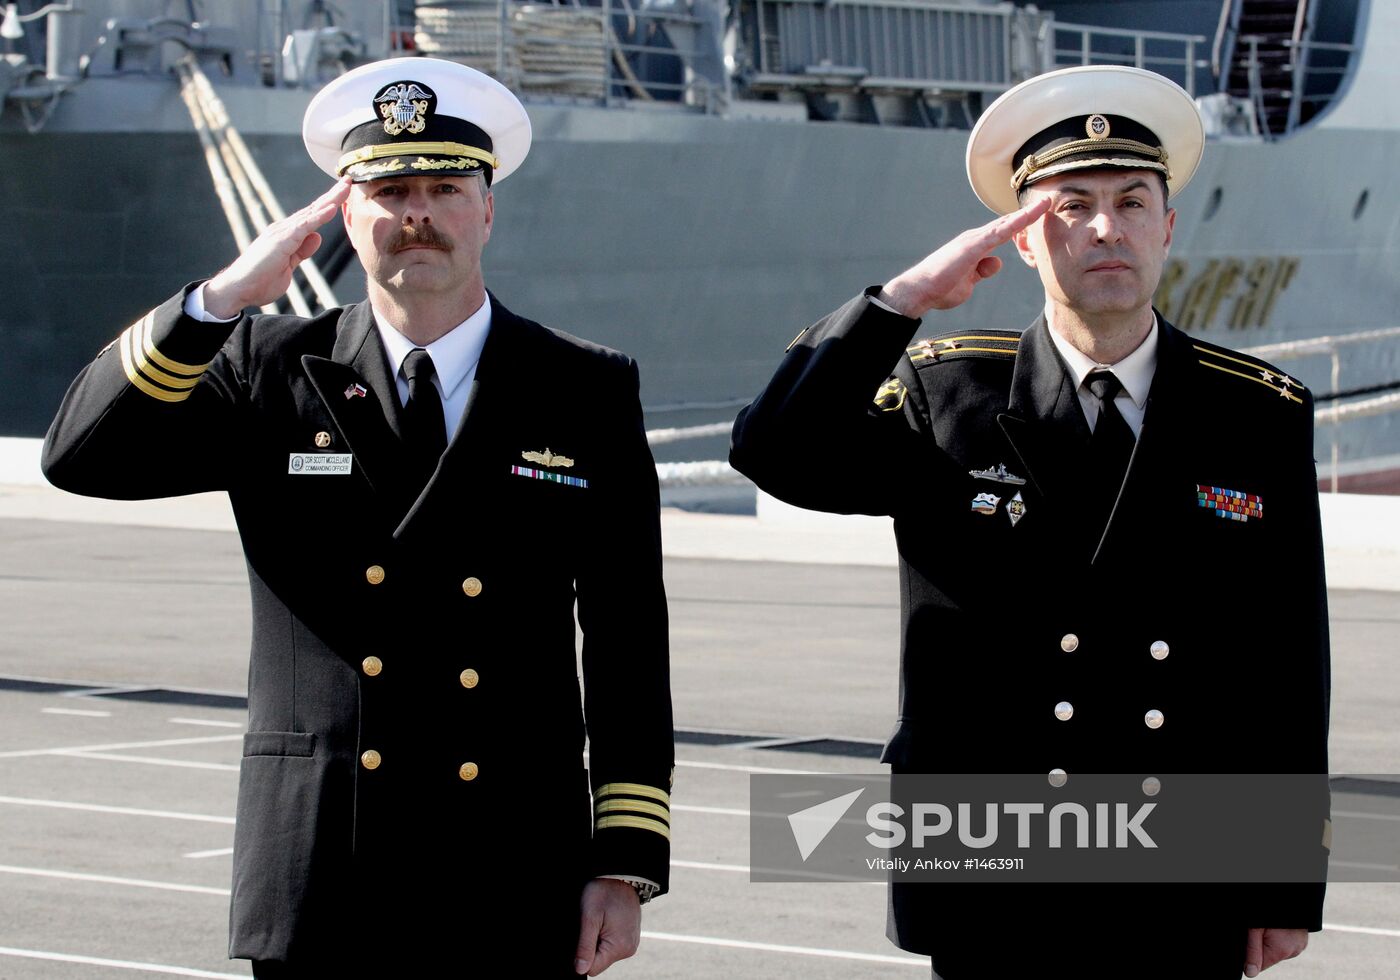 US Navy's guided missile destroyer Lassen arrives in Vladivostok